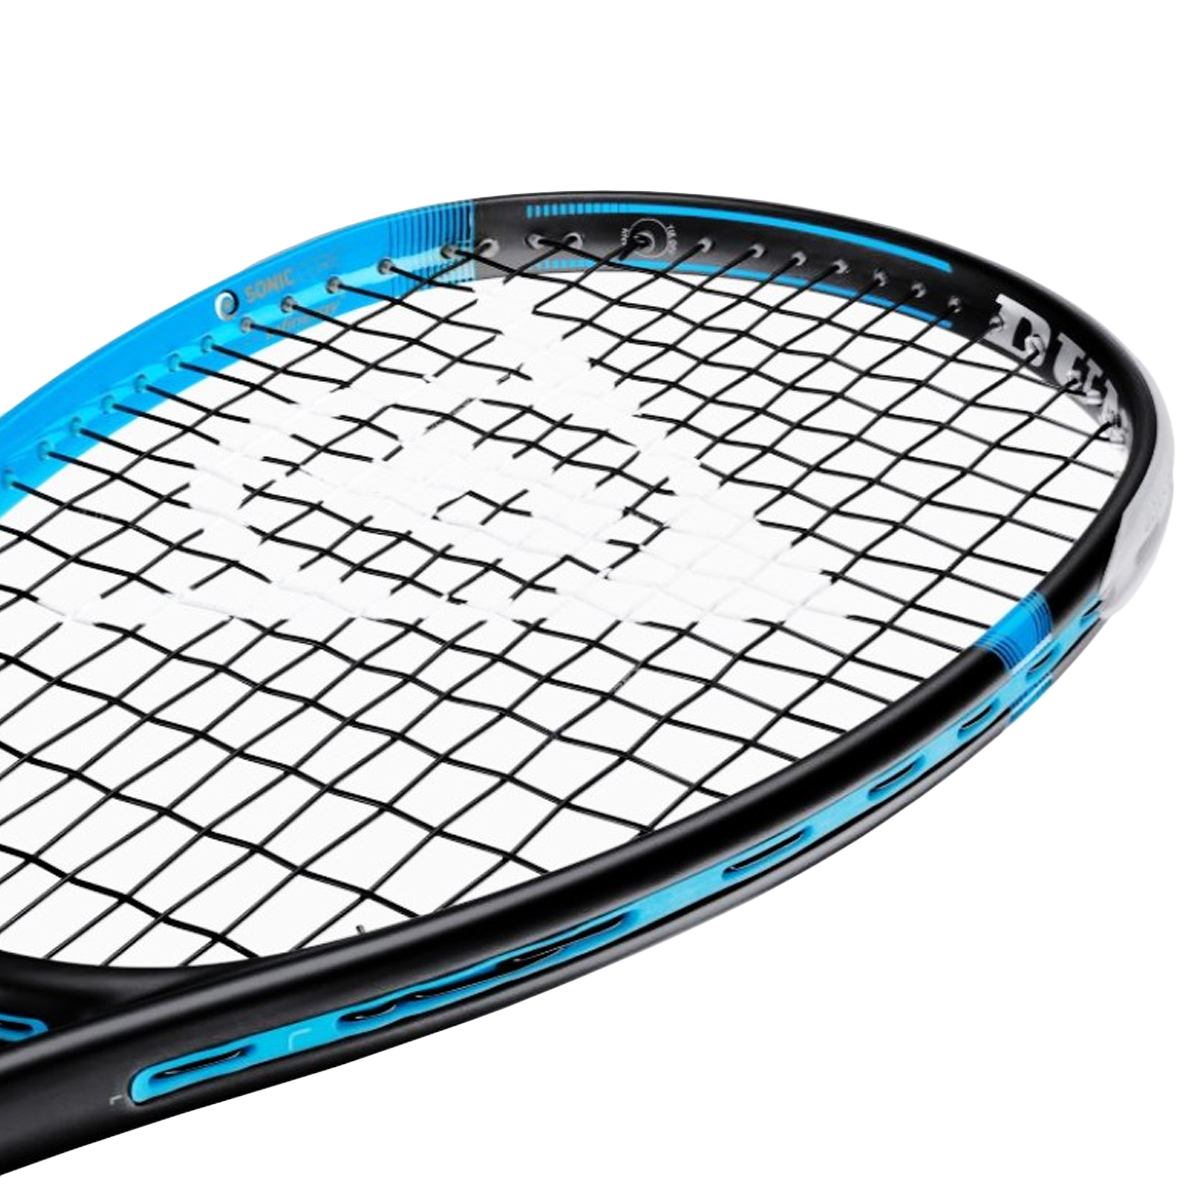 Raqueta Dunlop Squash Sonic Core Pro,  image number null